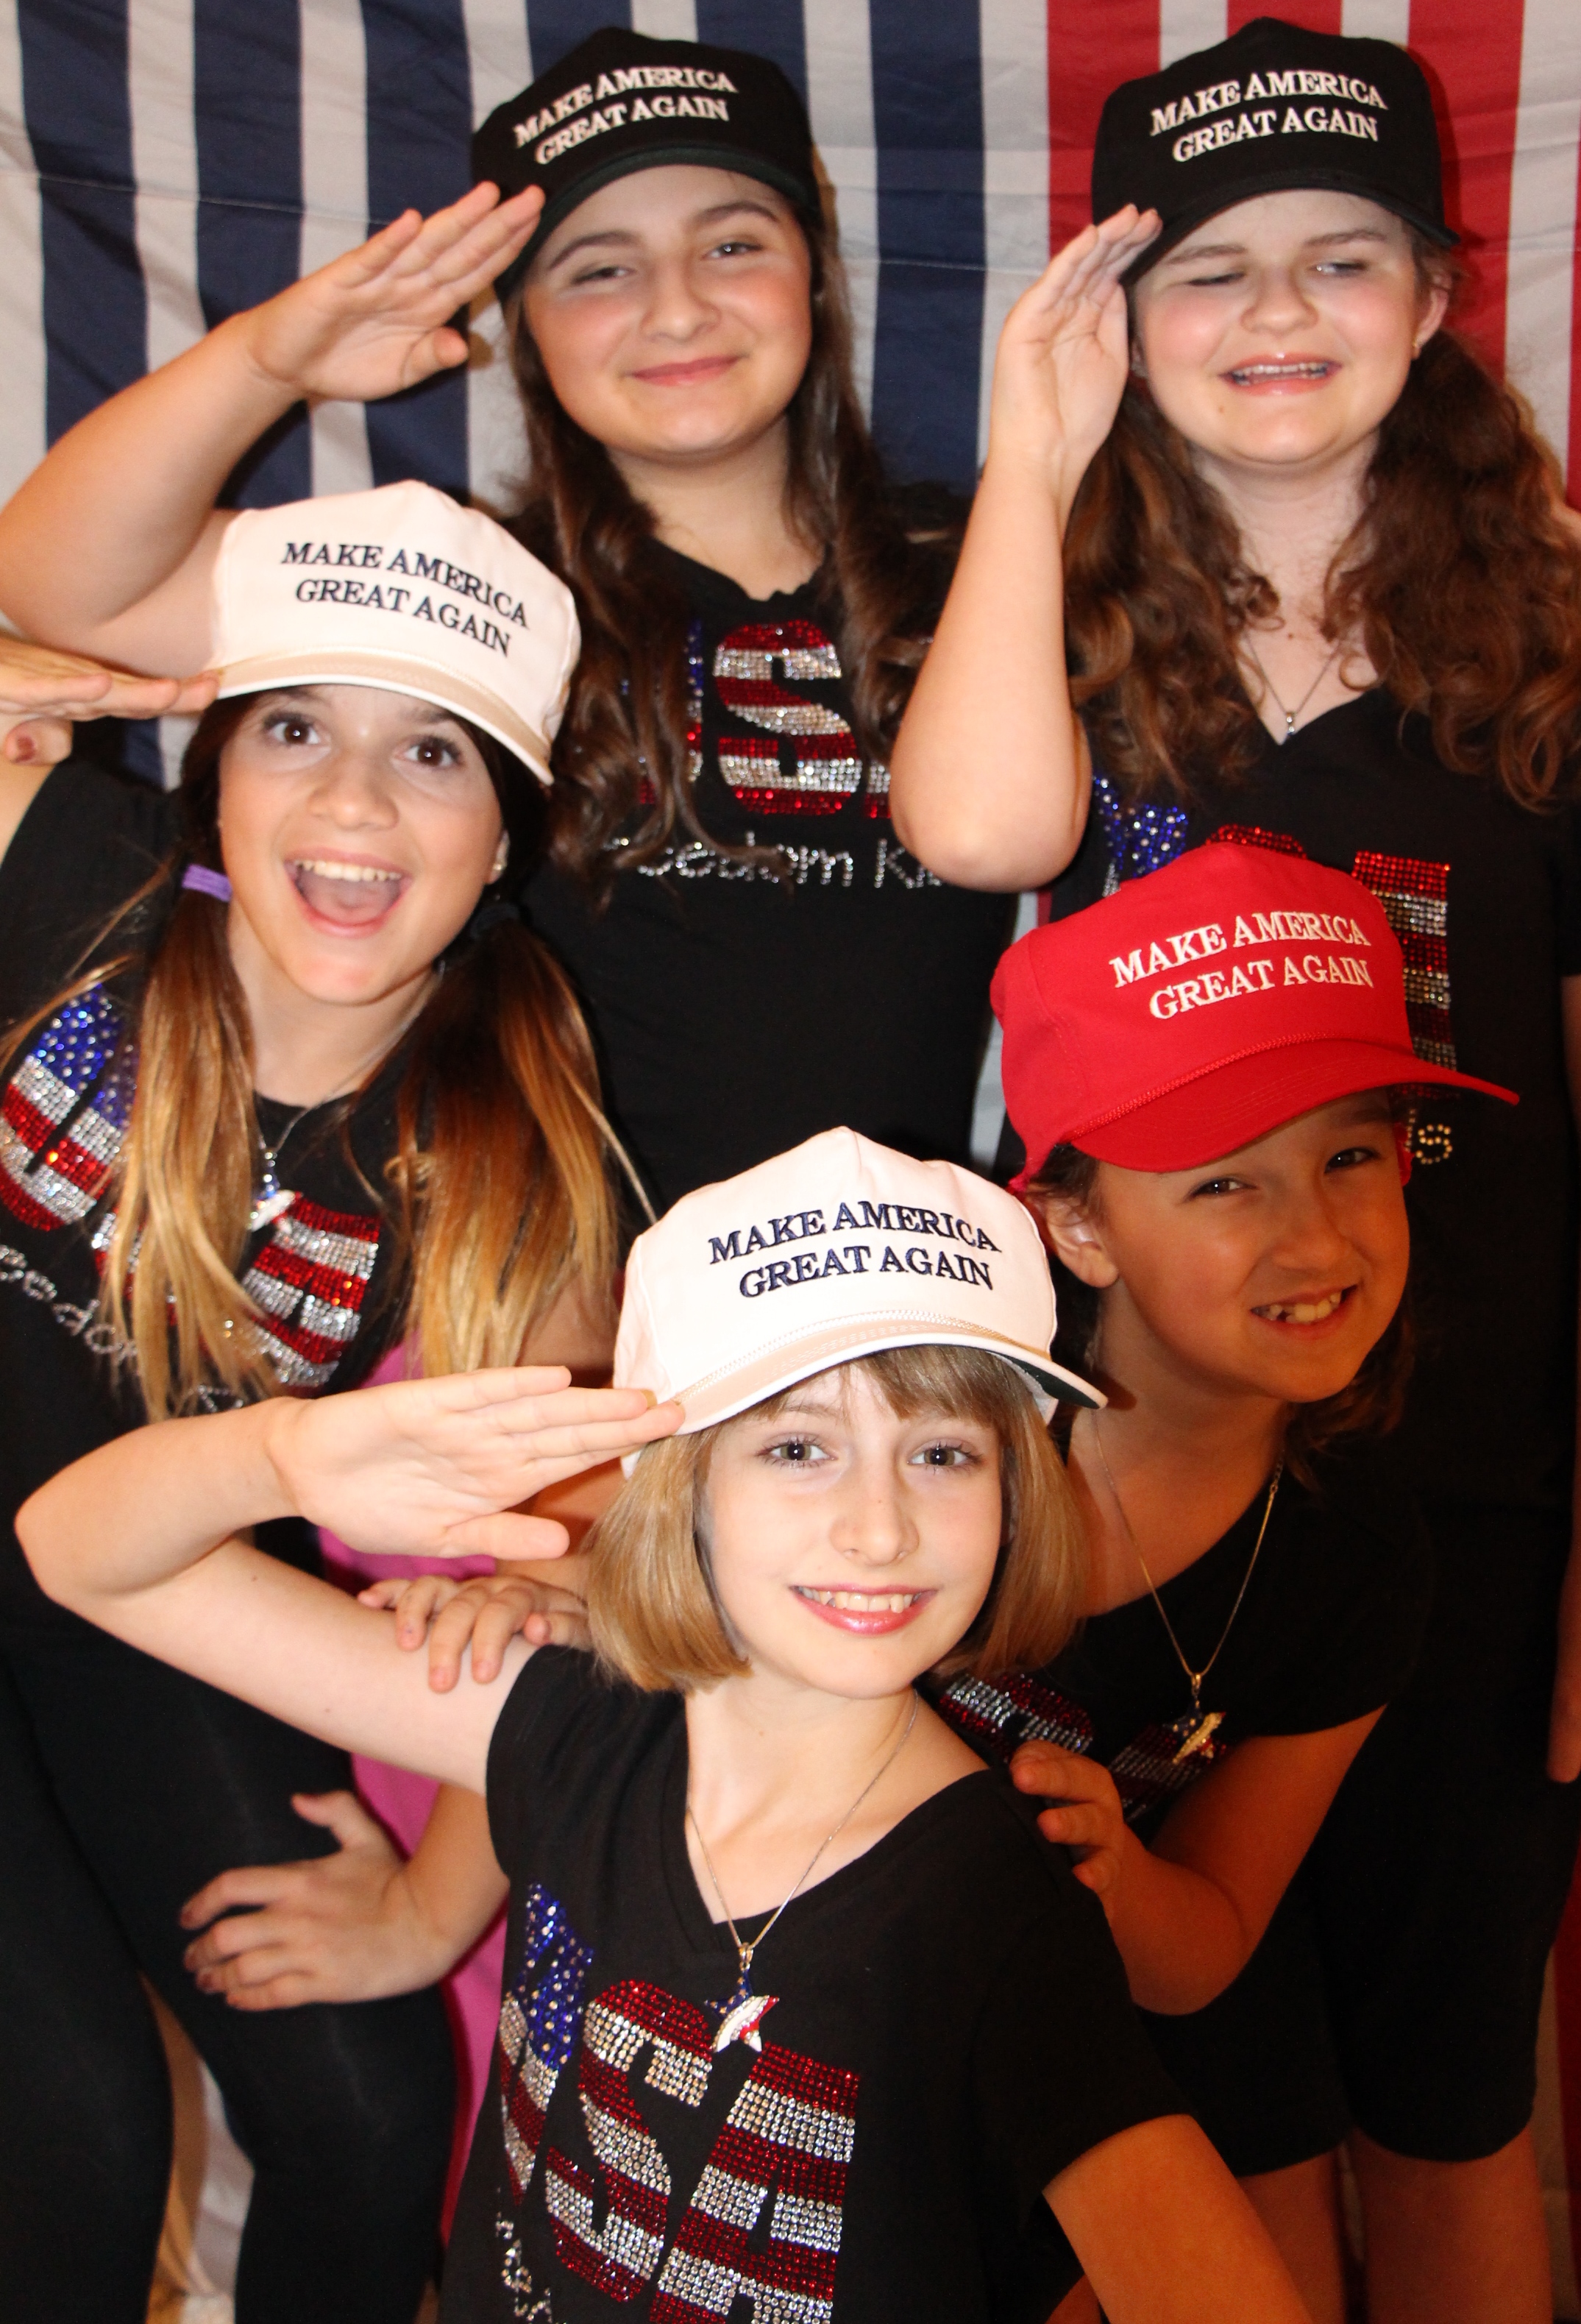 USA Freedom Kids Helping to Make America Great Again